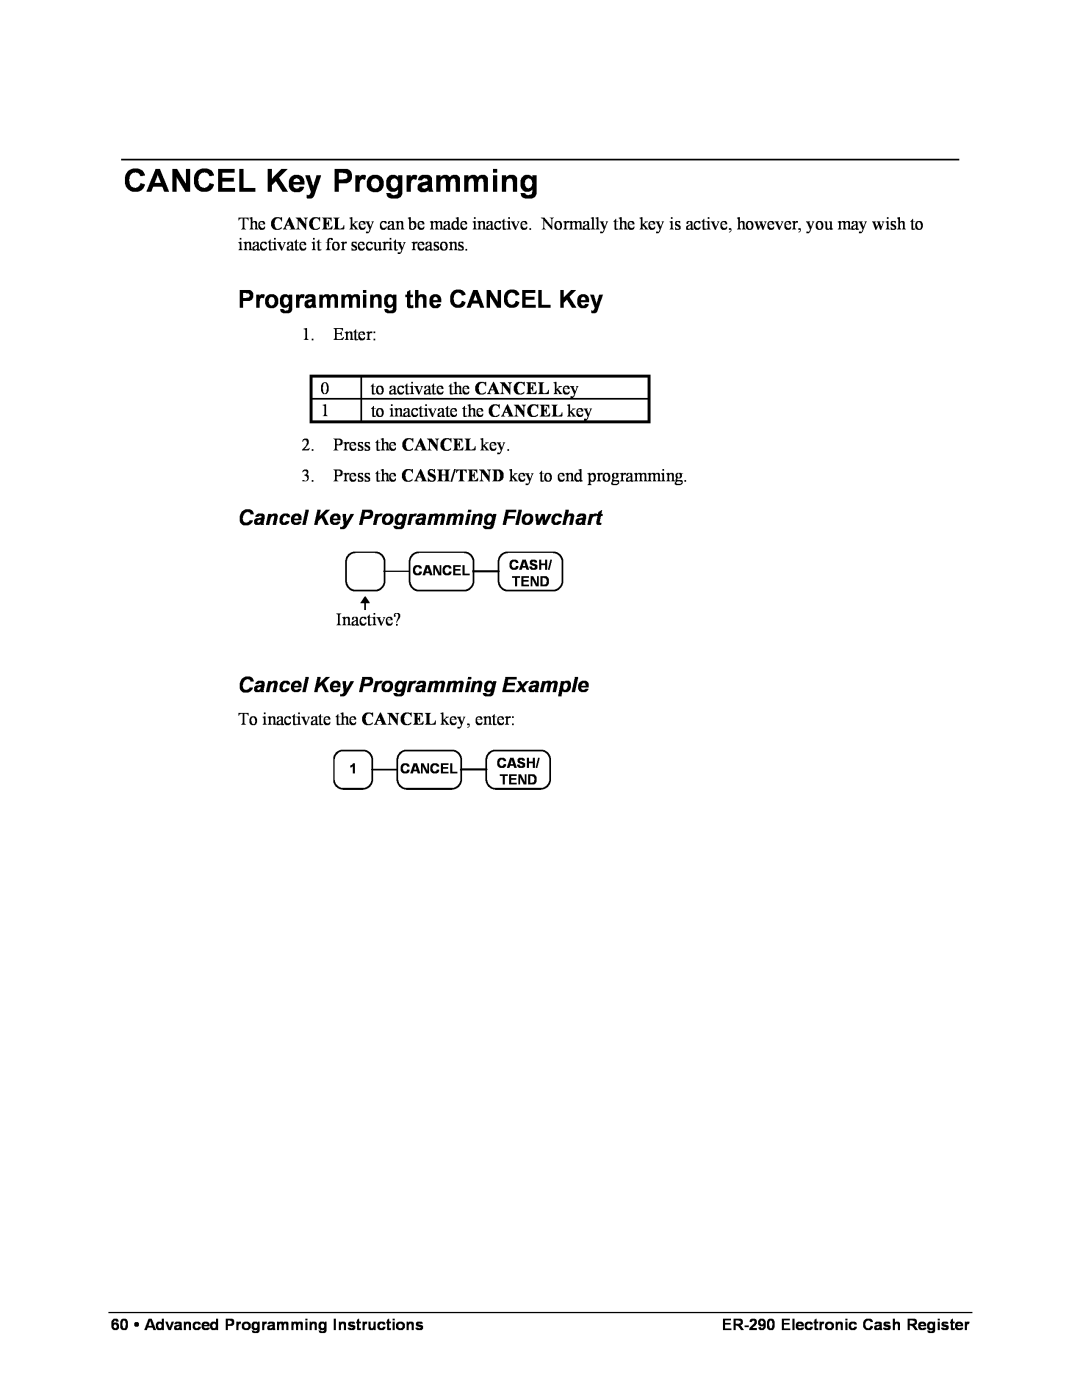 Samsung M-ER290 specifications CANCEL Key Programming, Programming the CANCEL Key, Cancel Key Programming Flowchart 